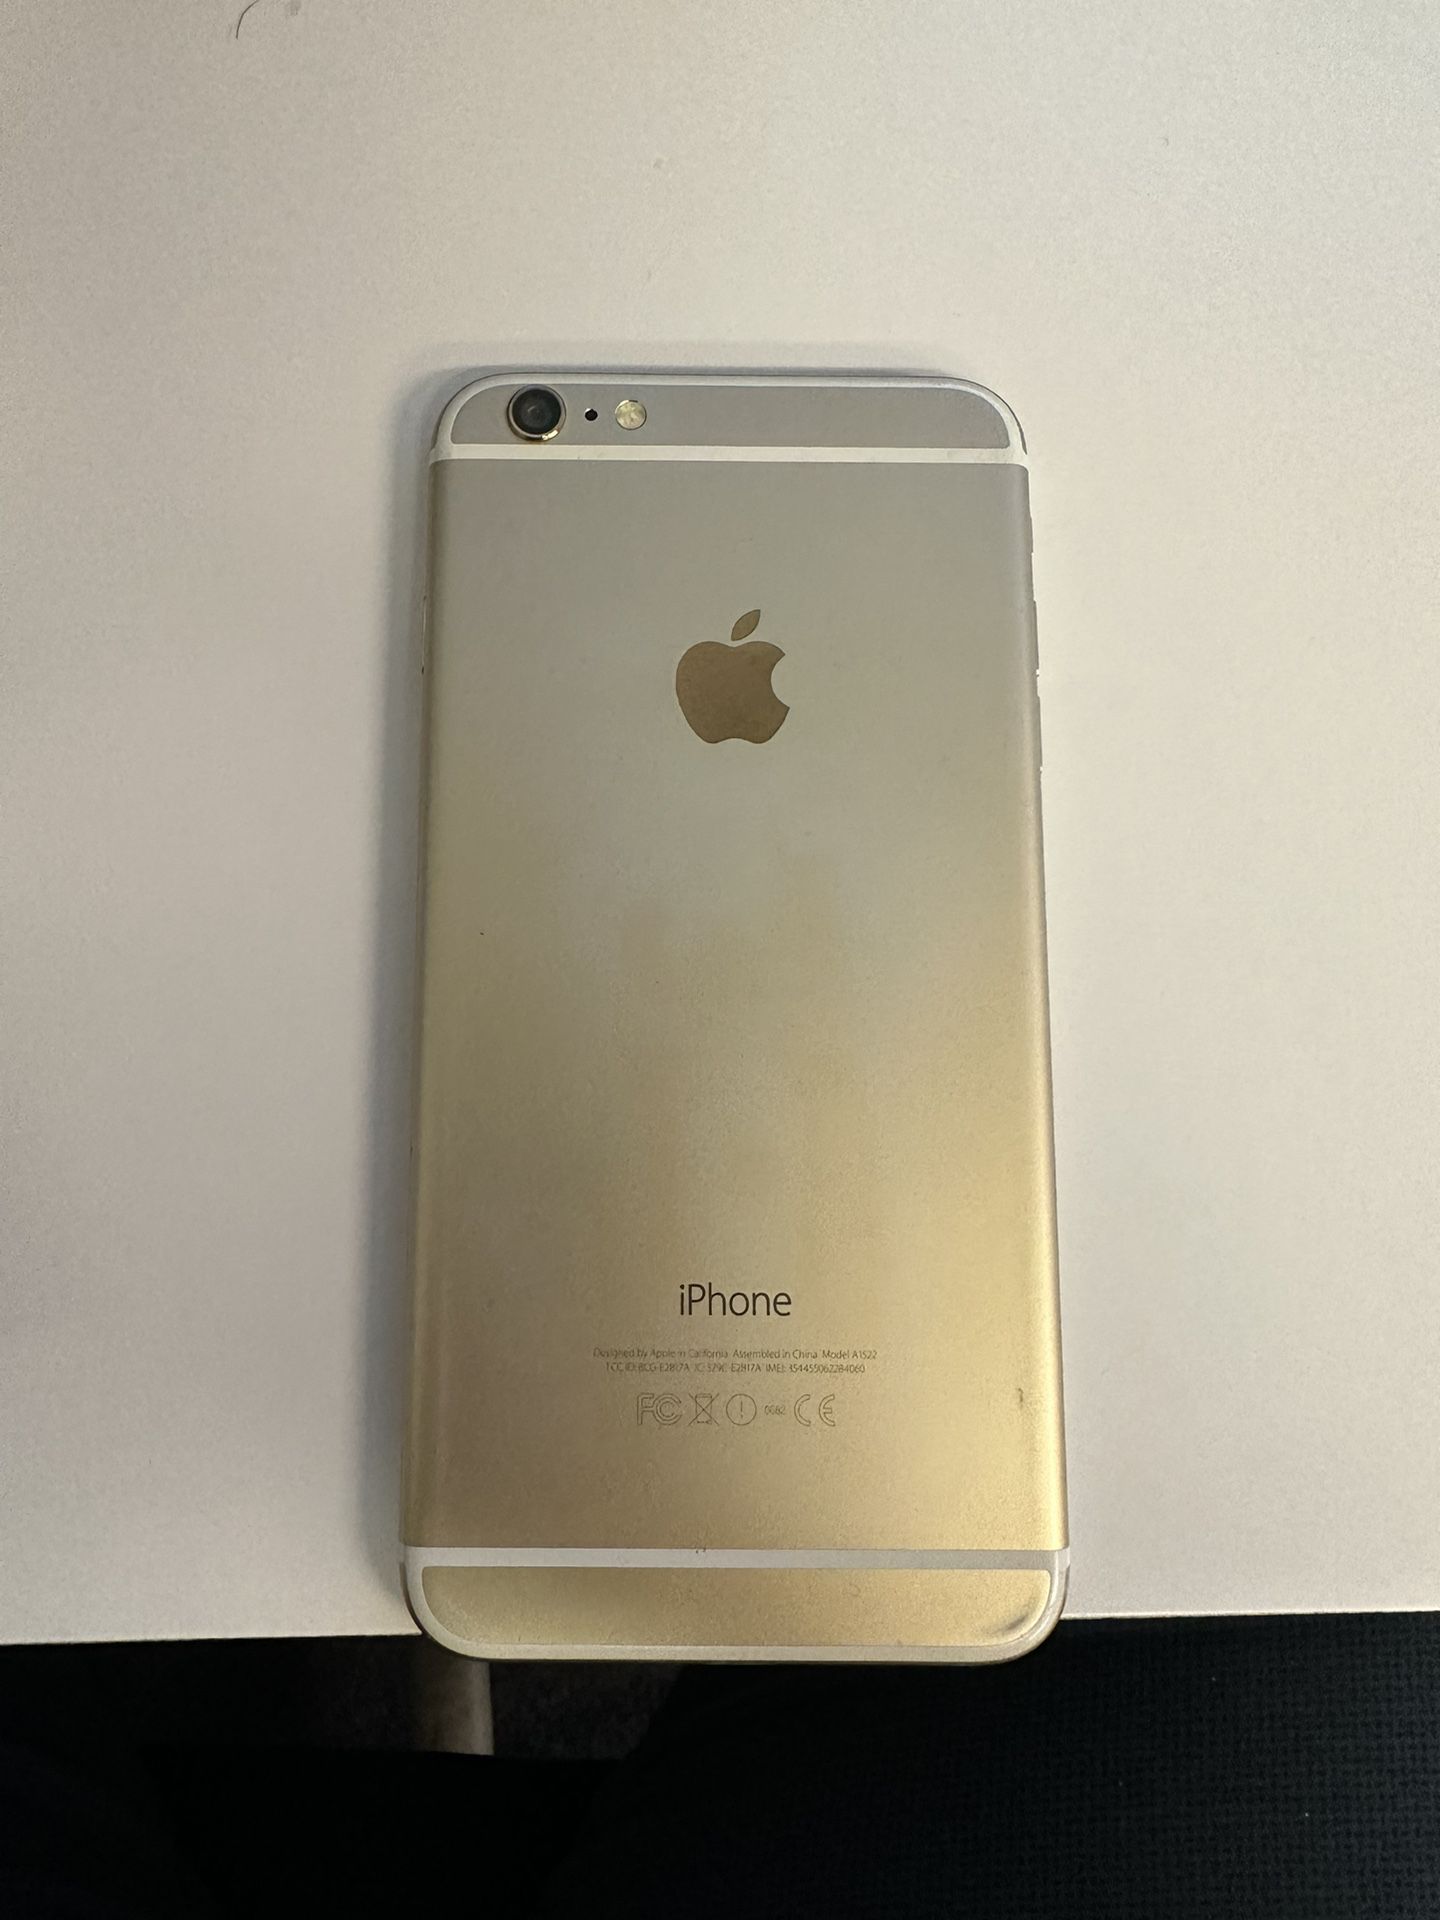 iPhone 6 Plus (128GB) - Unlocked